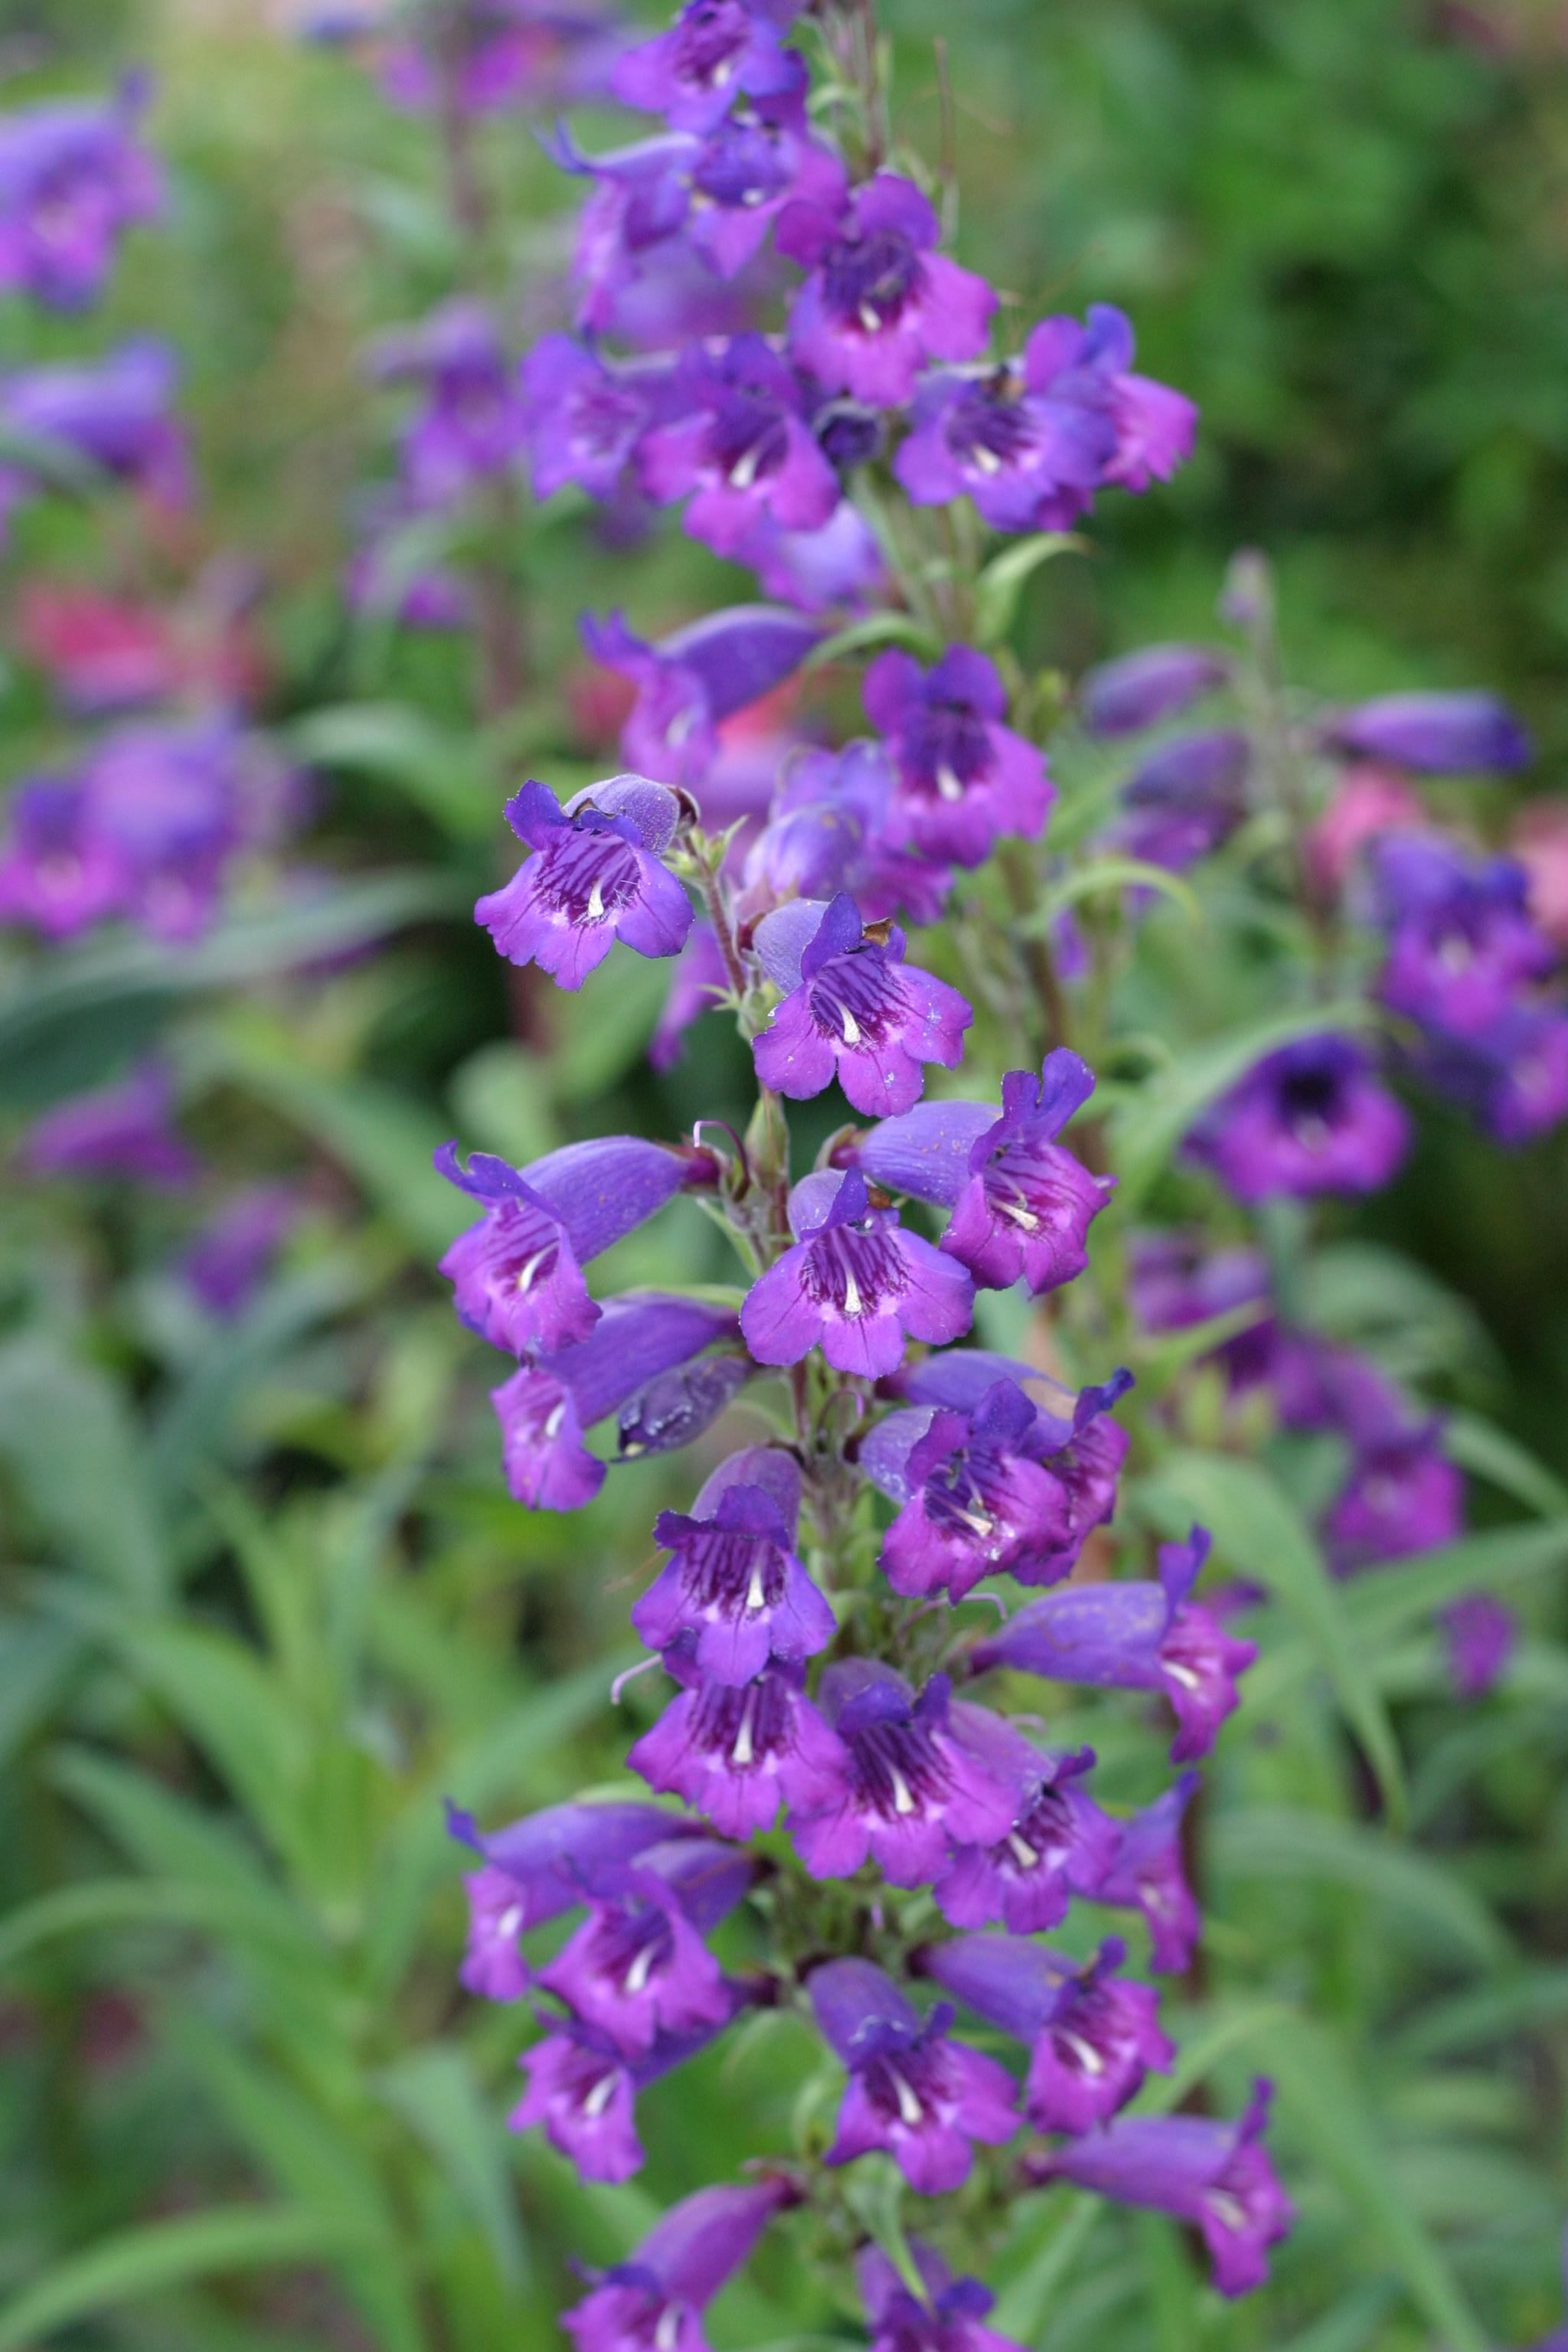 File:Small purple flowers.jpg - Wikimedia Commons